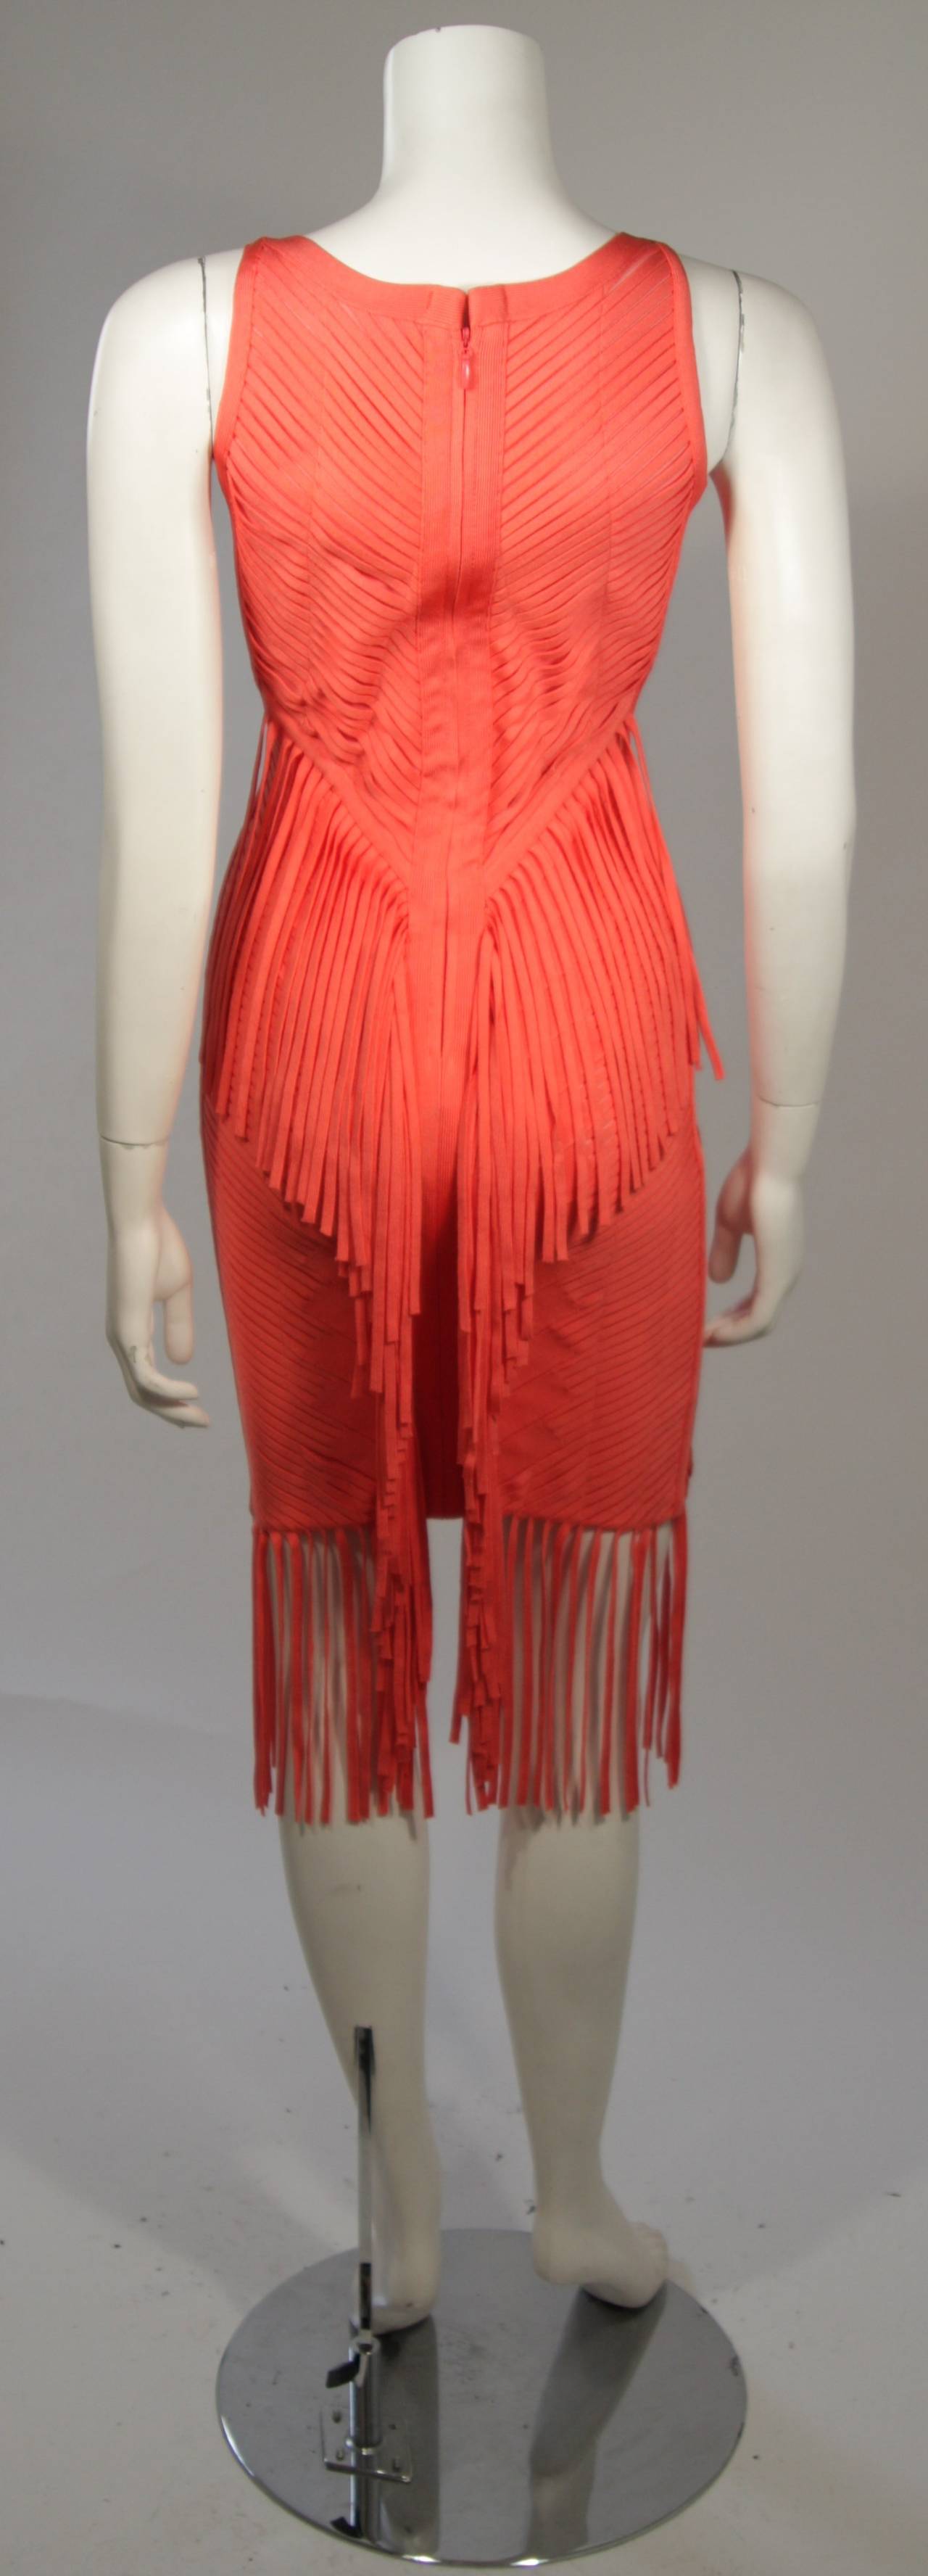 Herve Leger Orange Fringed Bodycon Dress Size XS For Sale 1